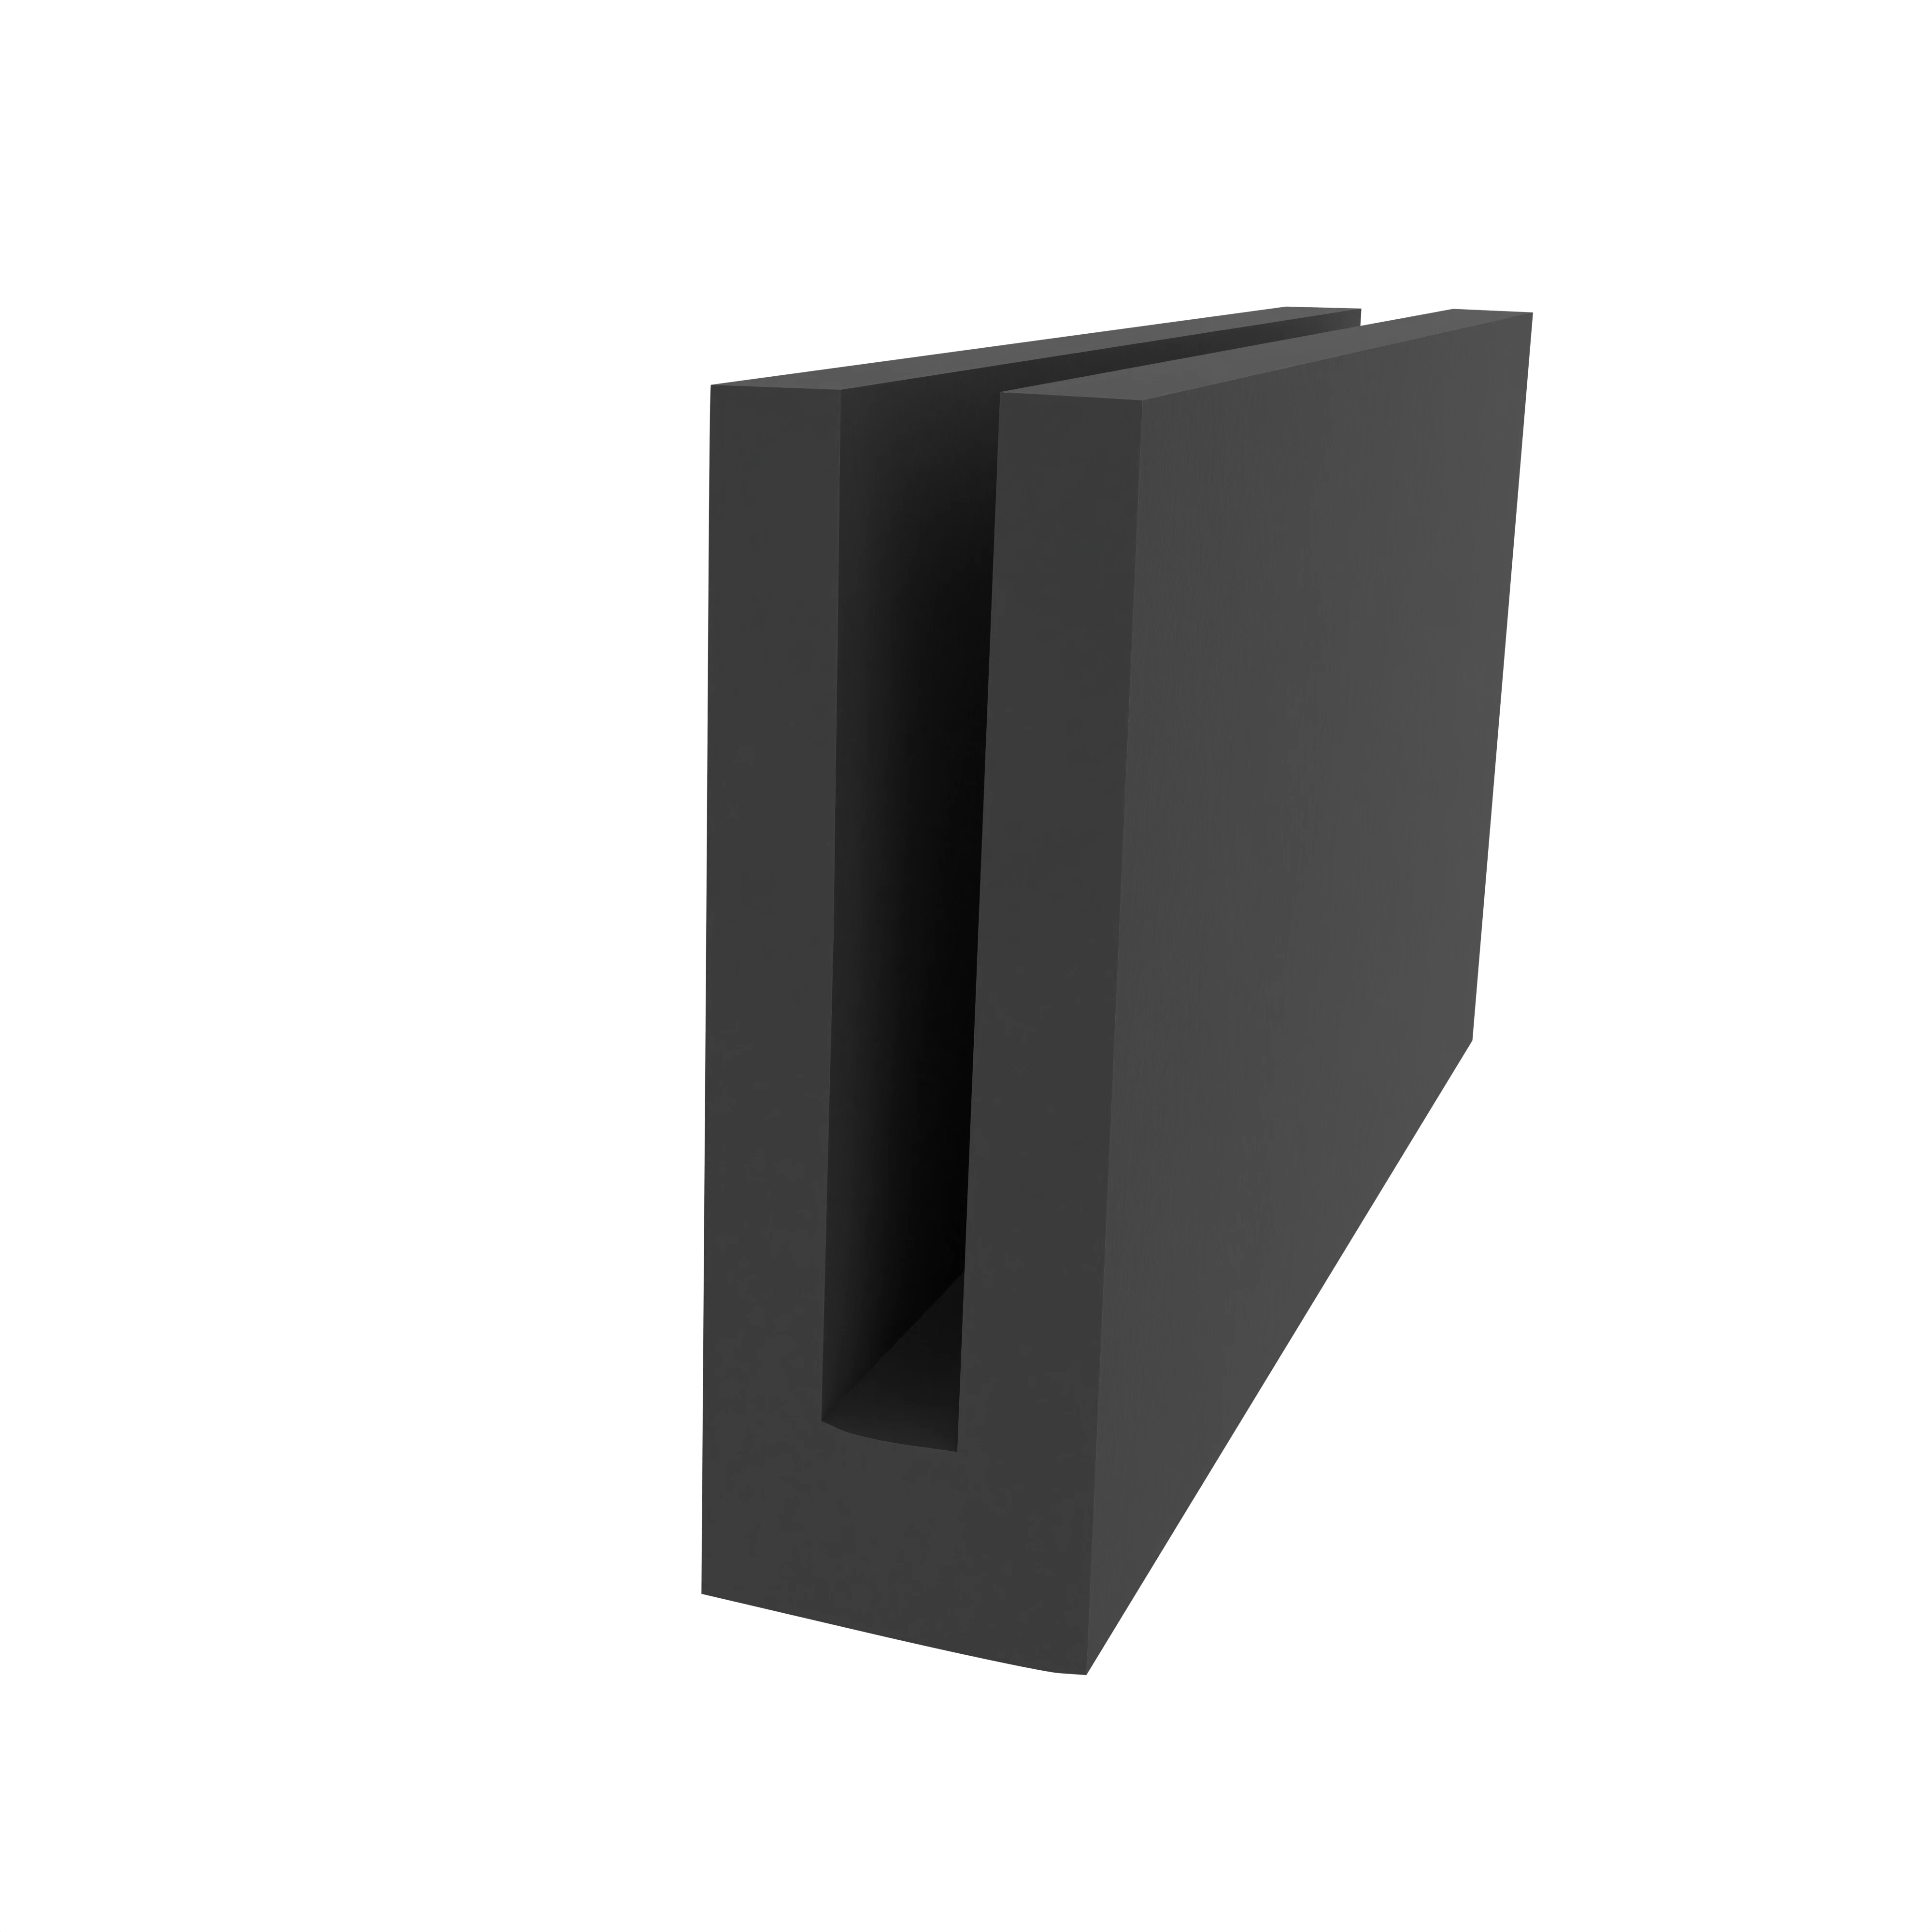 Kantenschutzprofil | Höhe: 12 mm | Farbe: schwarz